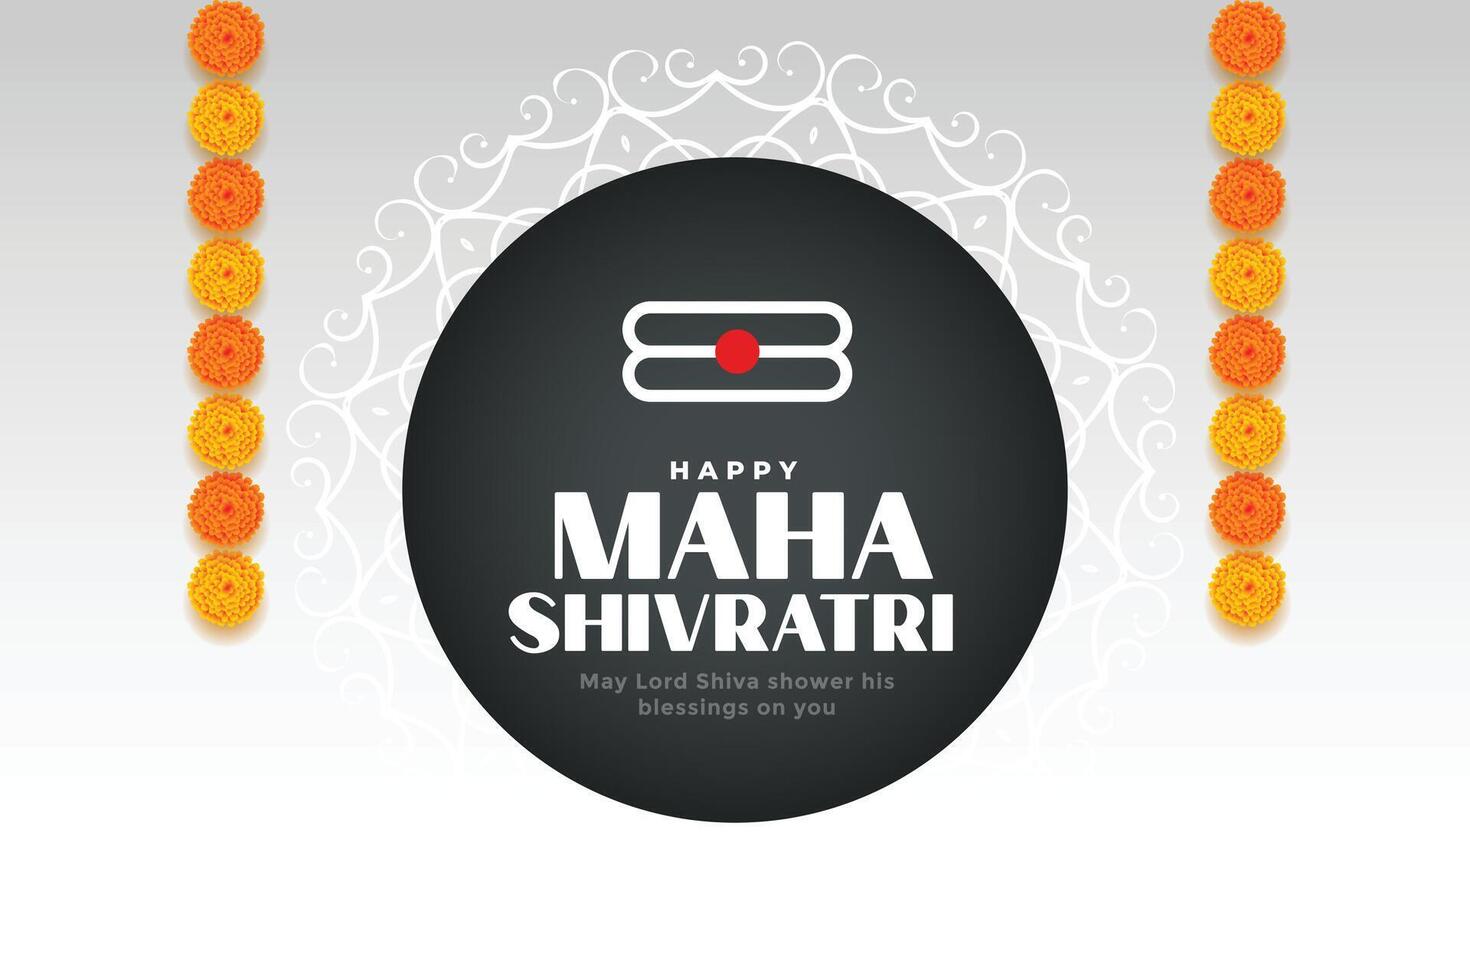 maha shivratri hindu festival greeting with marigold flower decoration vector